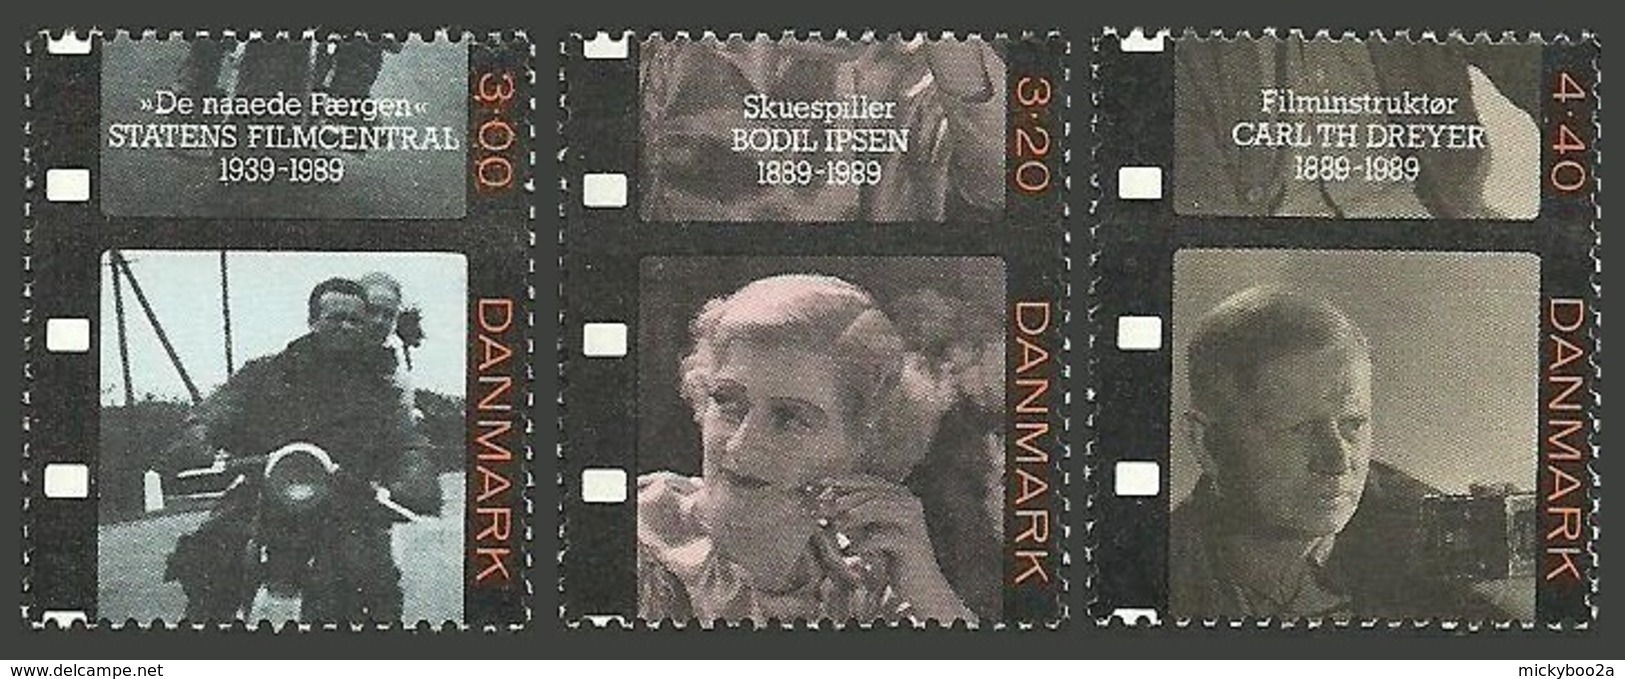 DENMARK 1989 FILMS CINEMA MOTORCYCLES SET MNH - Unused Stamps